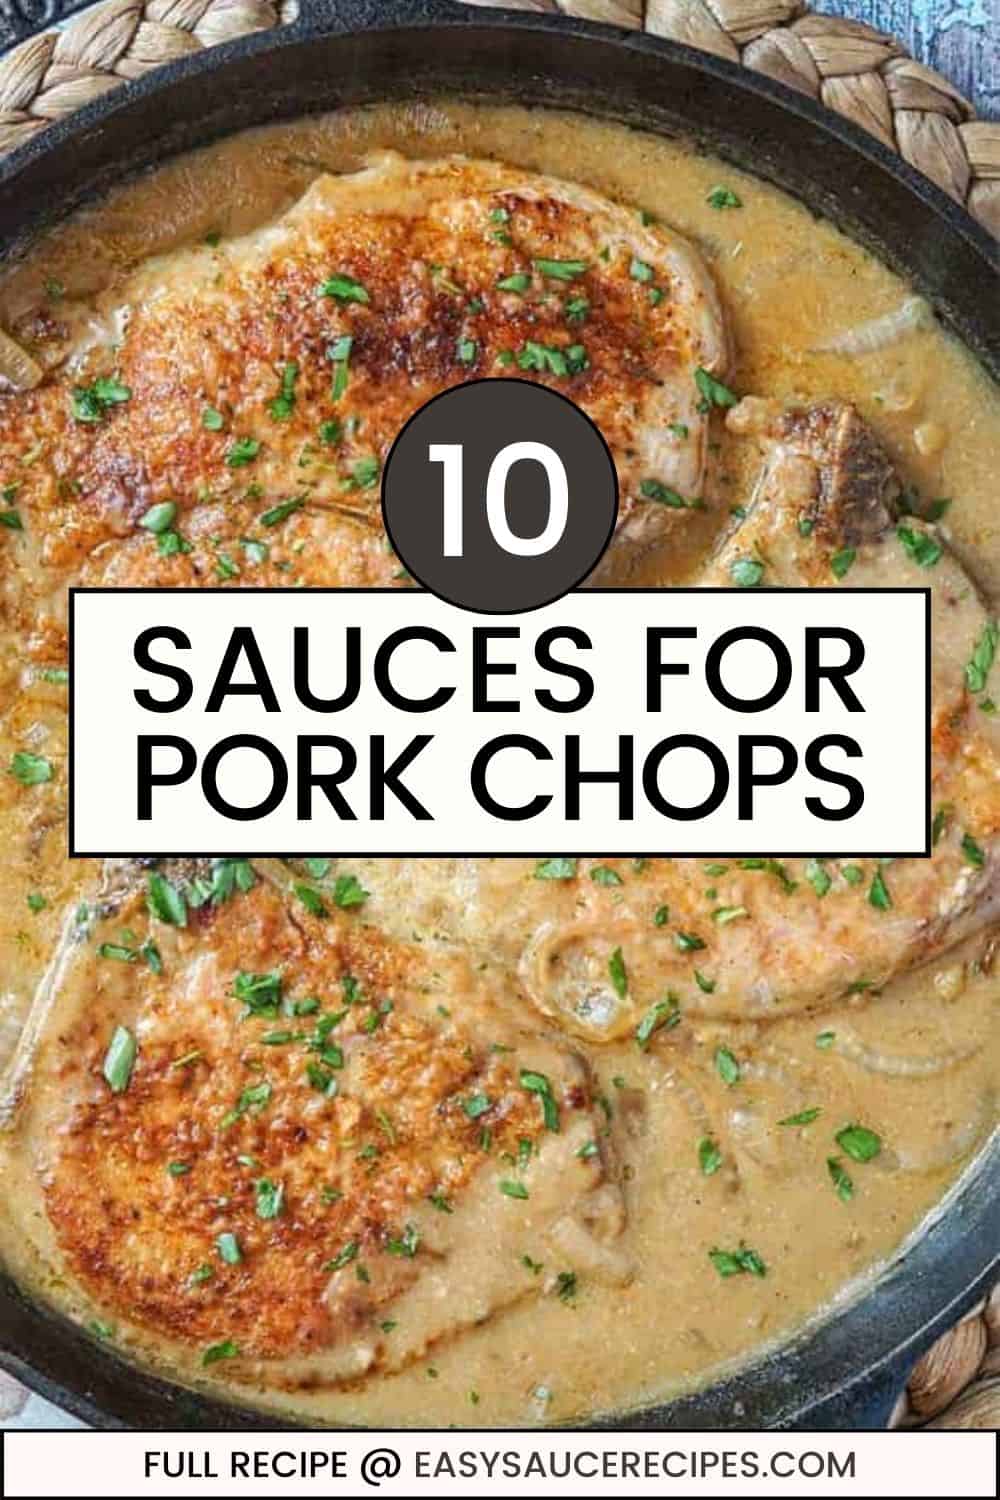 10 Sauces for Pork Chops | Easy Sauce Recipes